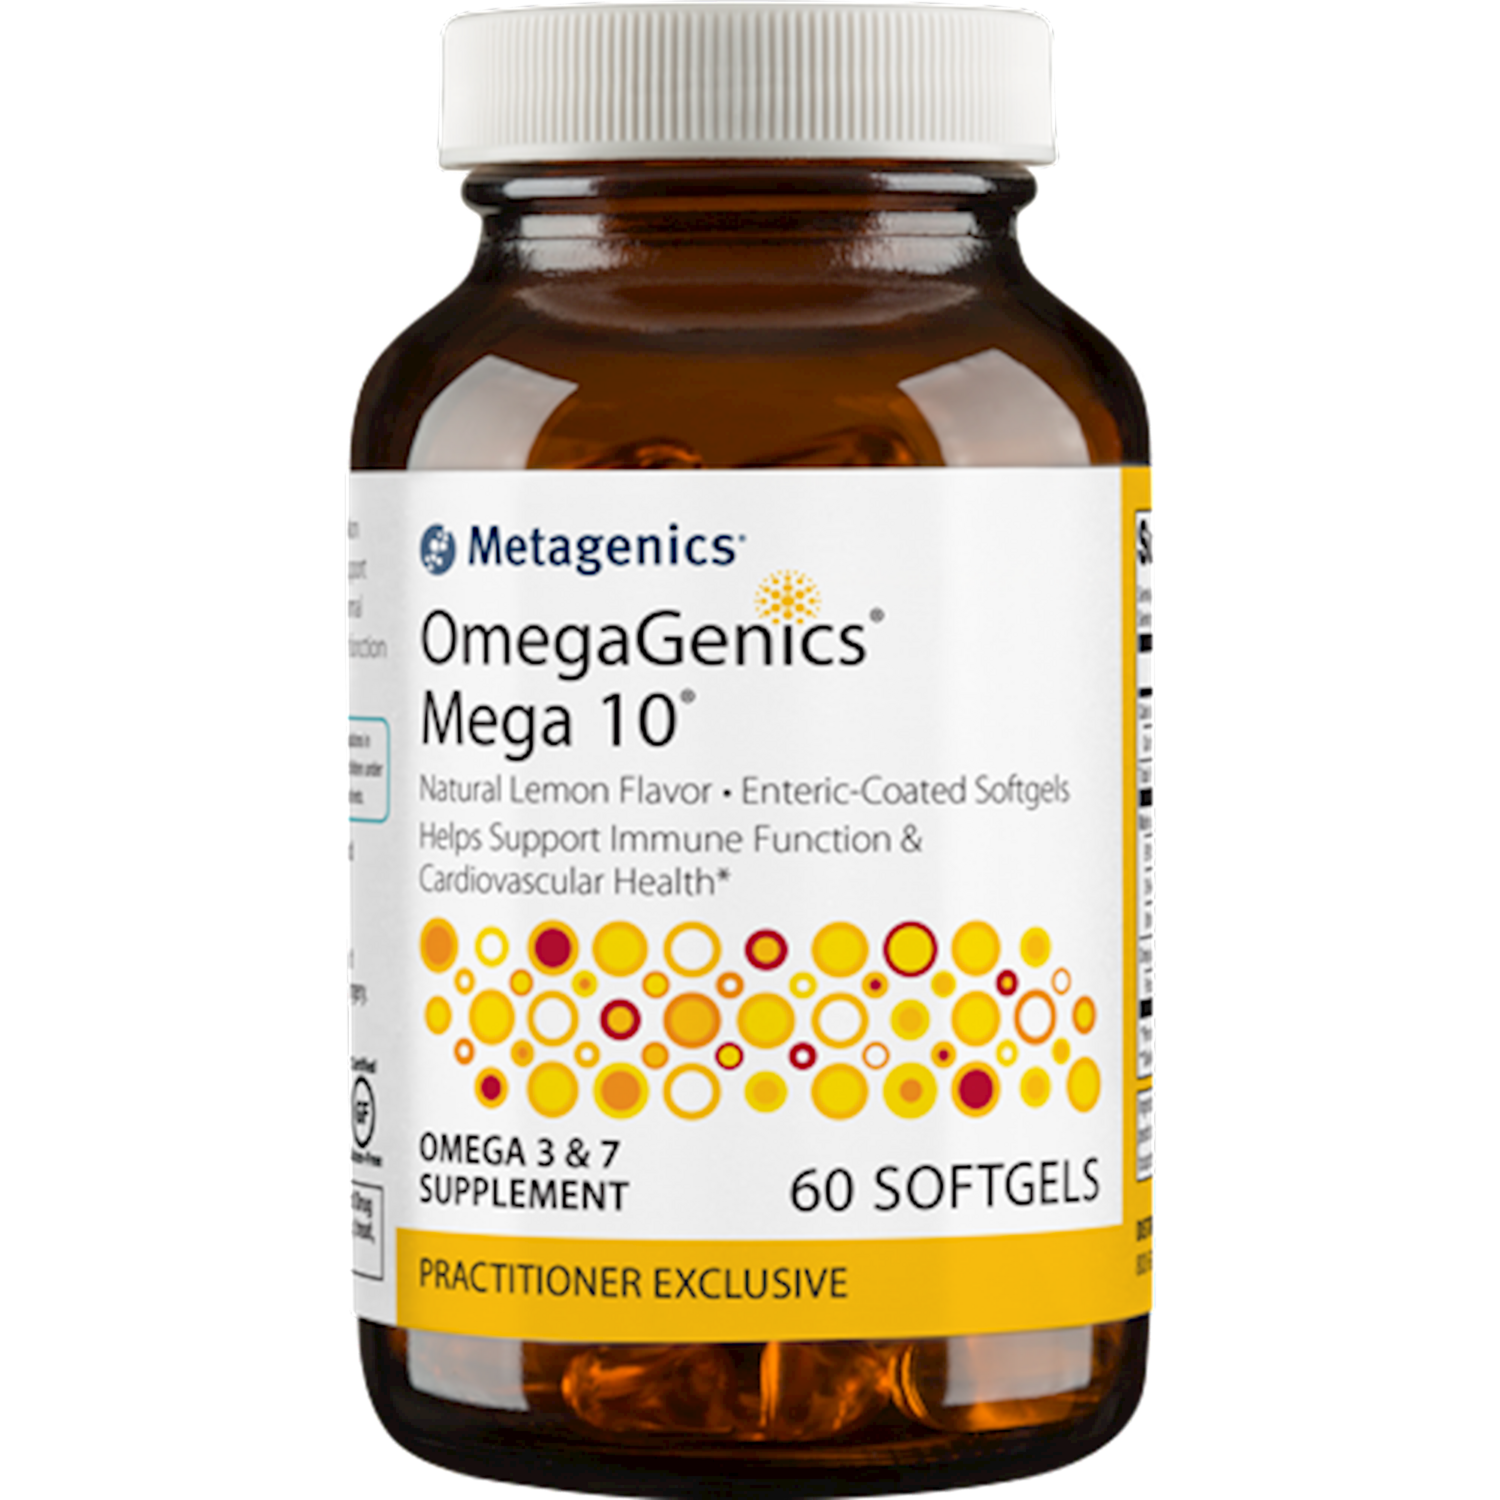 OmegaGenics Mega 10 60 gels Metagenics